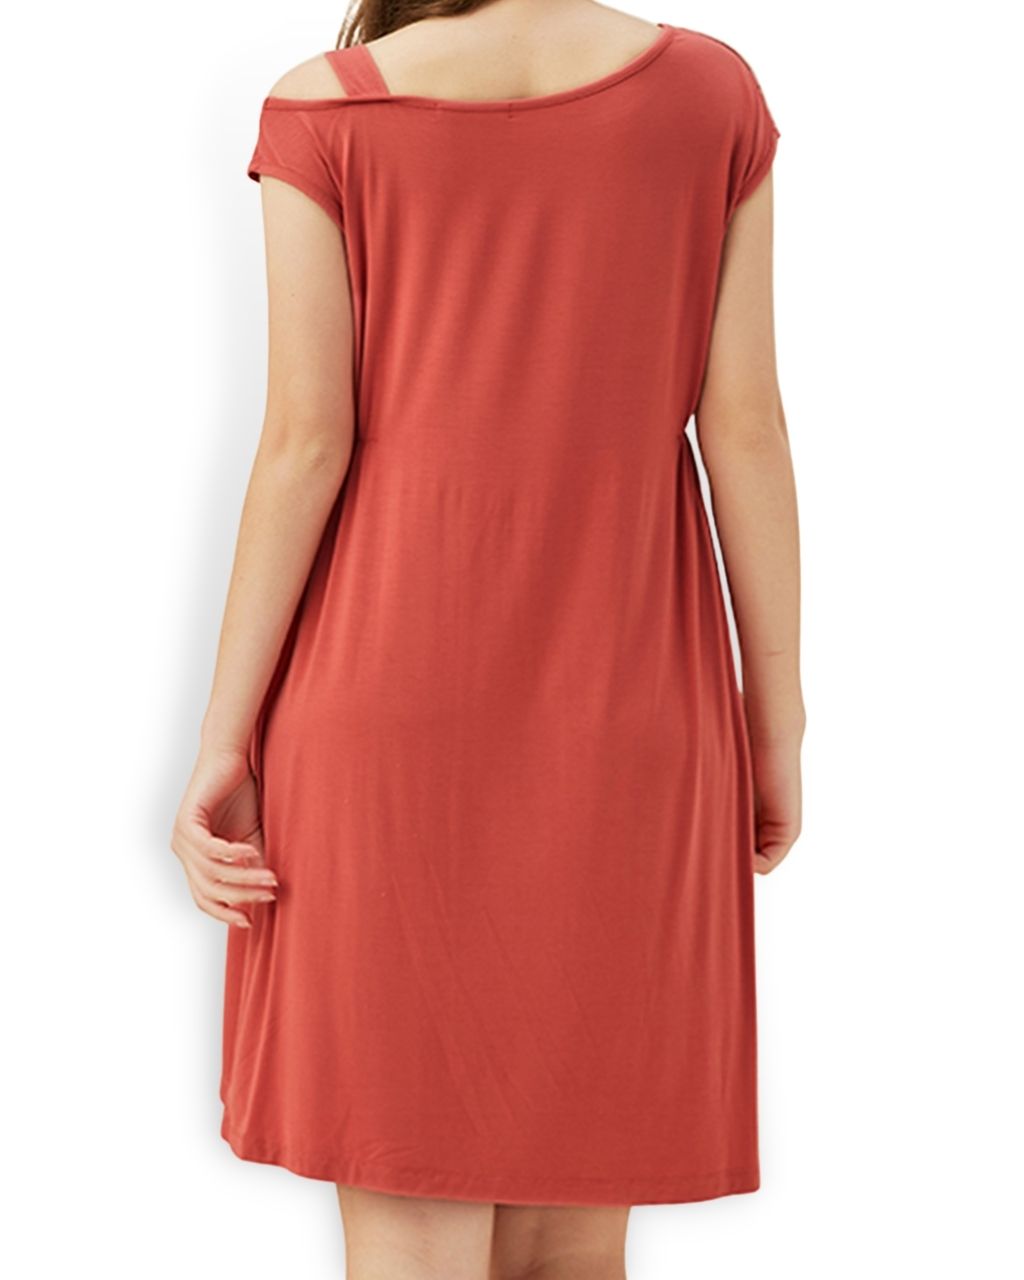 ADKN Bamboo Women Loungewear - Slip Dress in Coral Red